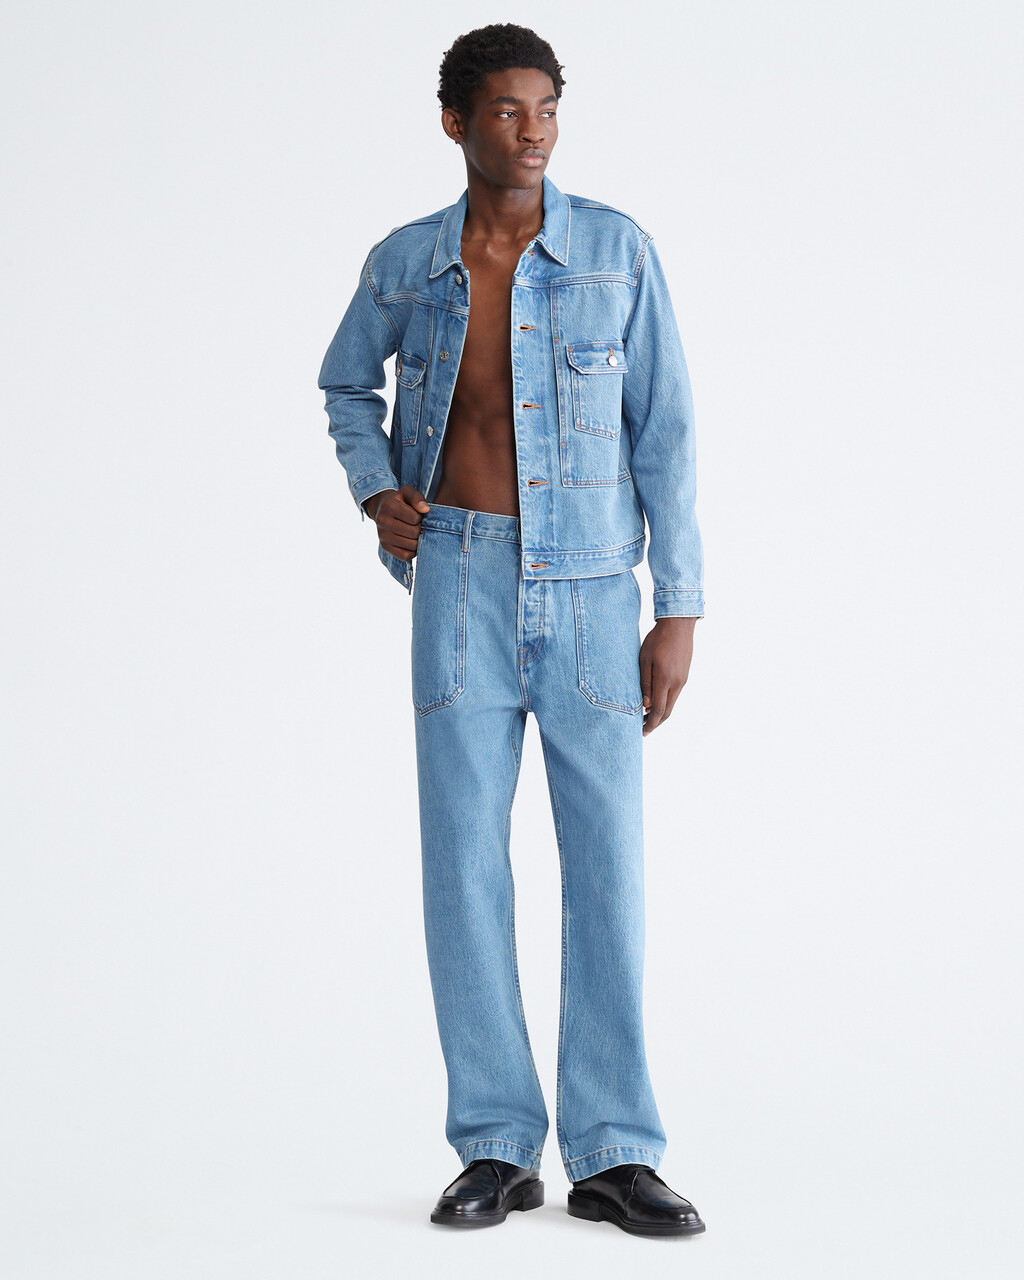 Standards Coastal Blue Deck Jeans, COASTAL BLUE, hi-res